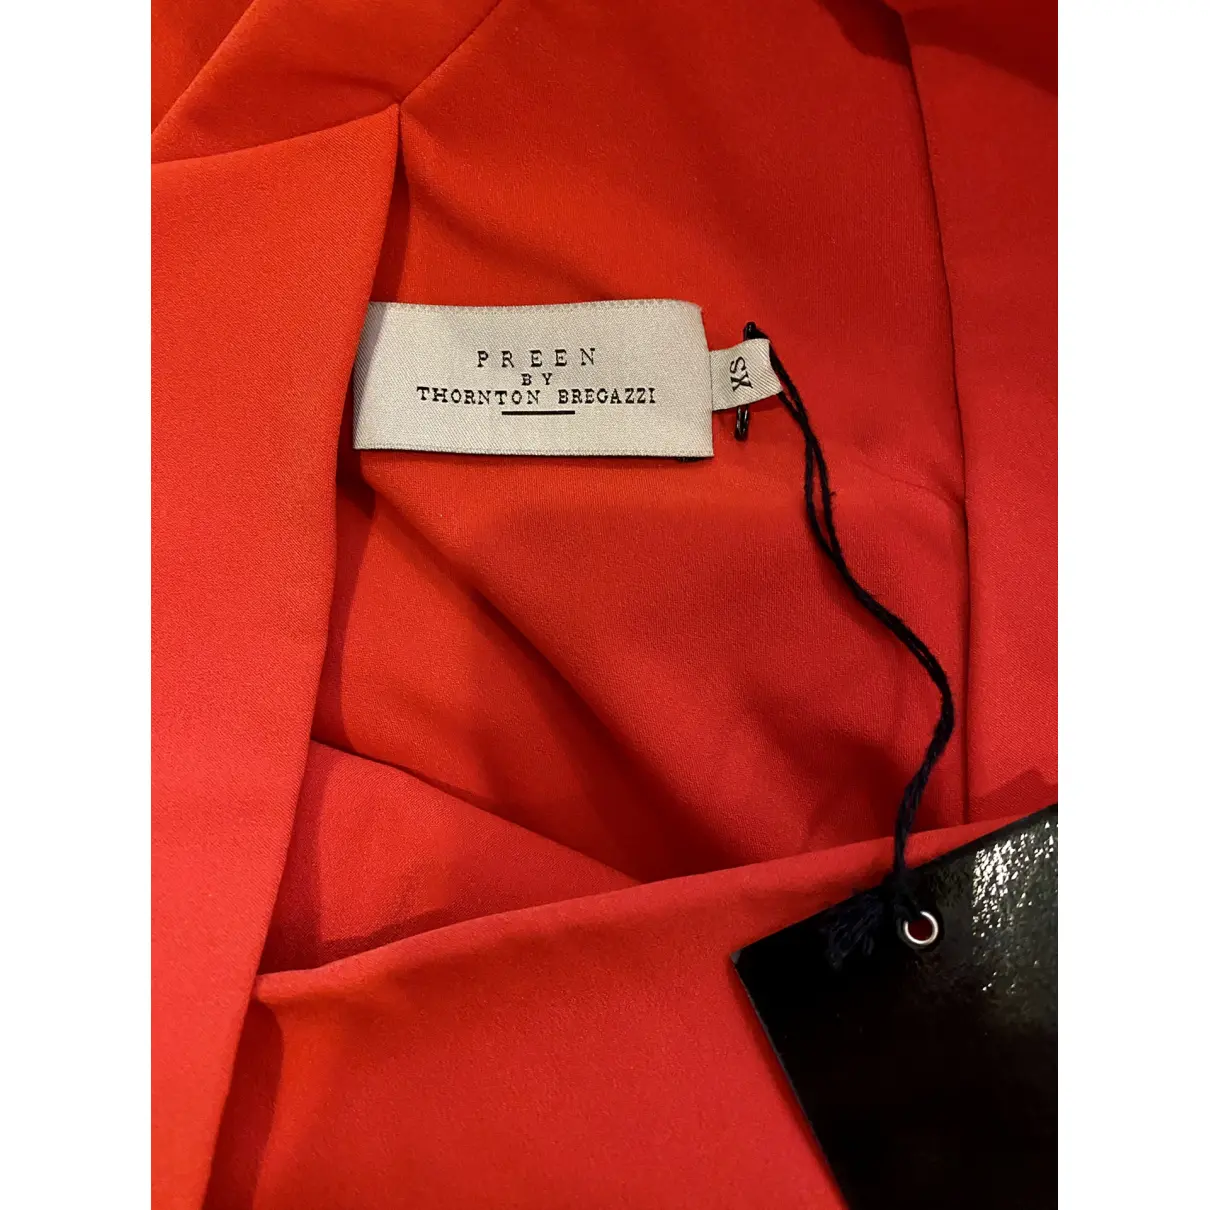 Buy Preen by Thornton Bregazzi Mid-length dress online